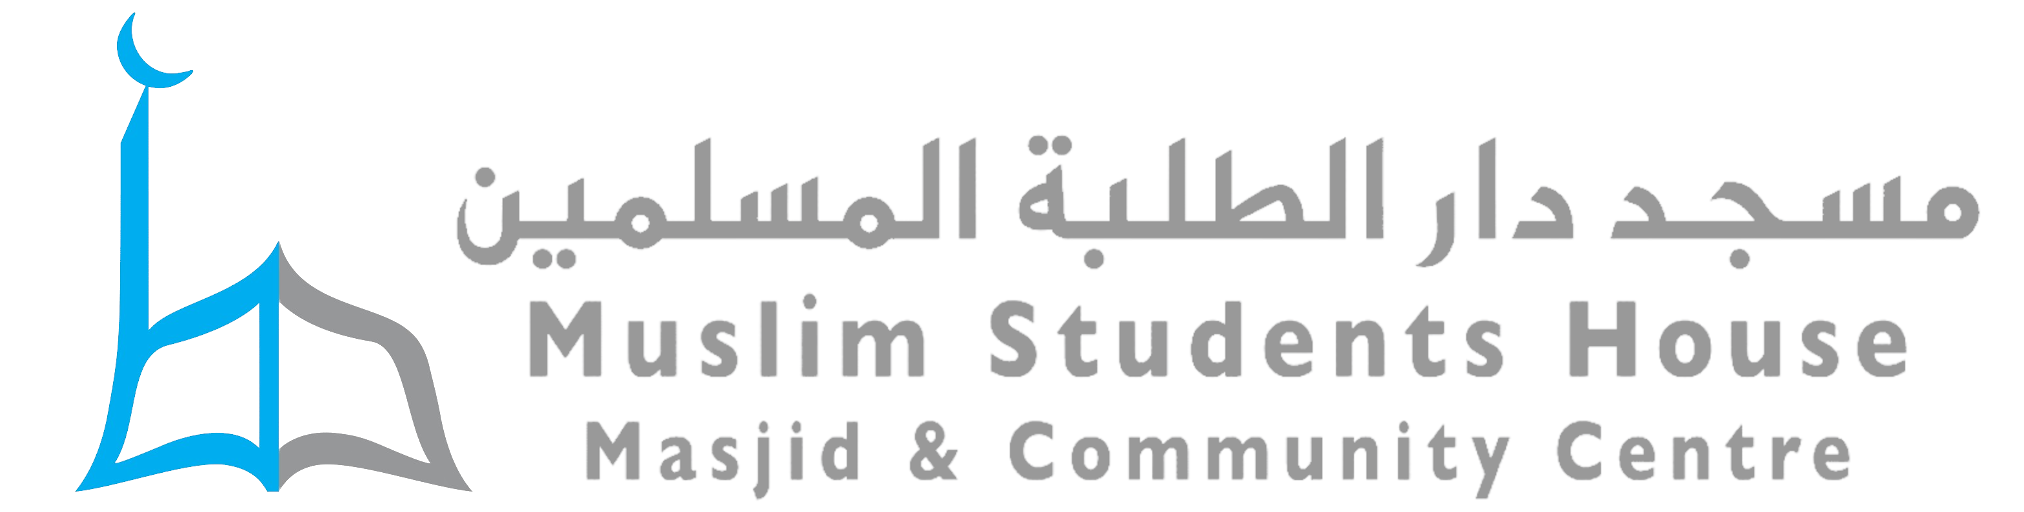 Muslim Students House